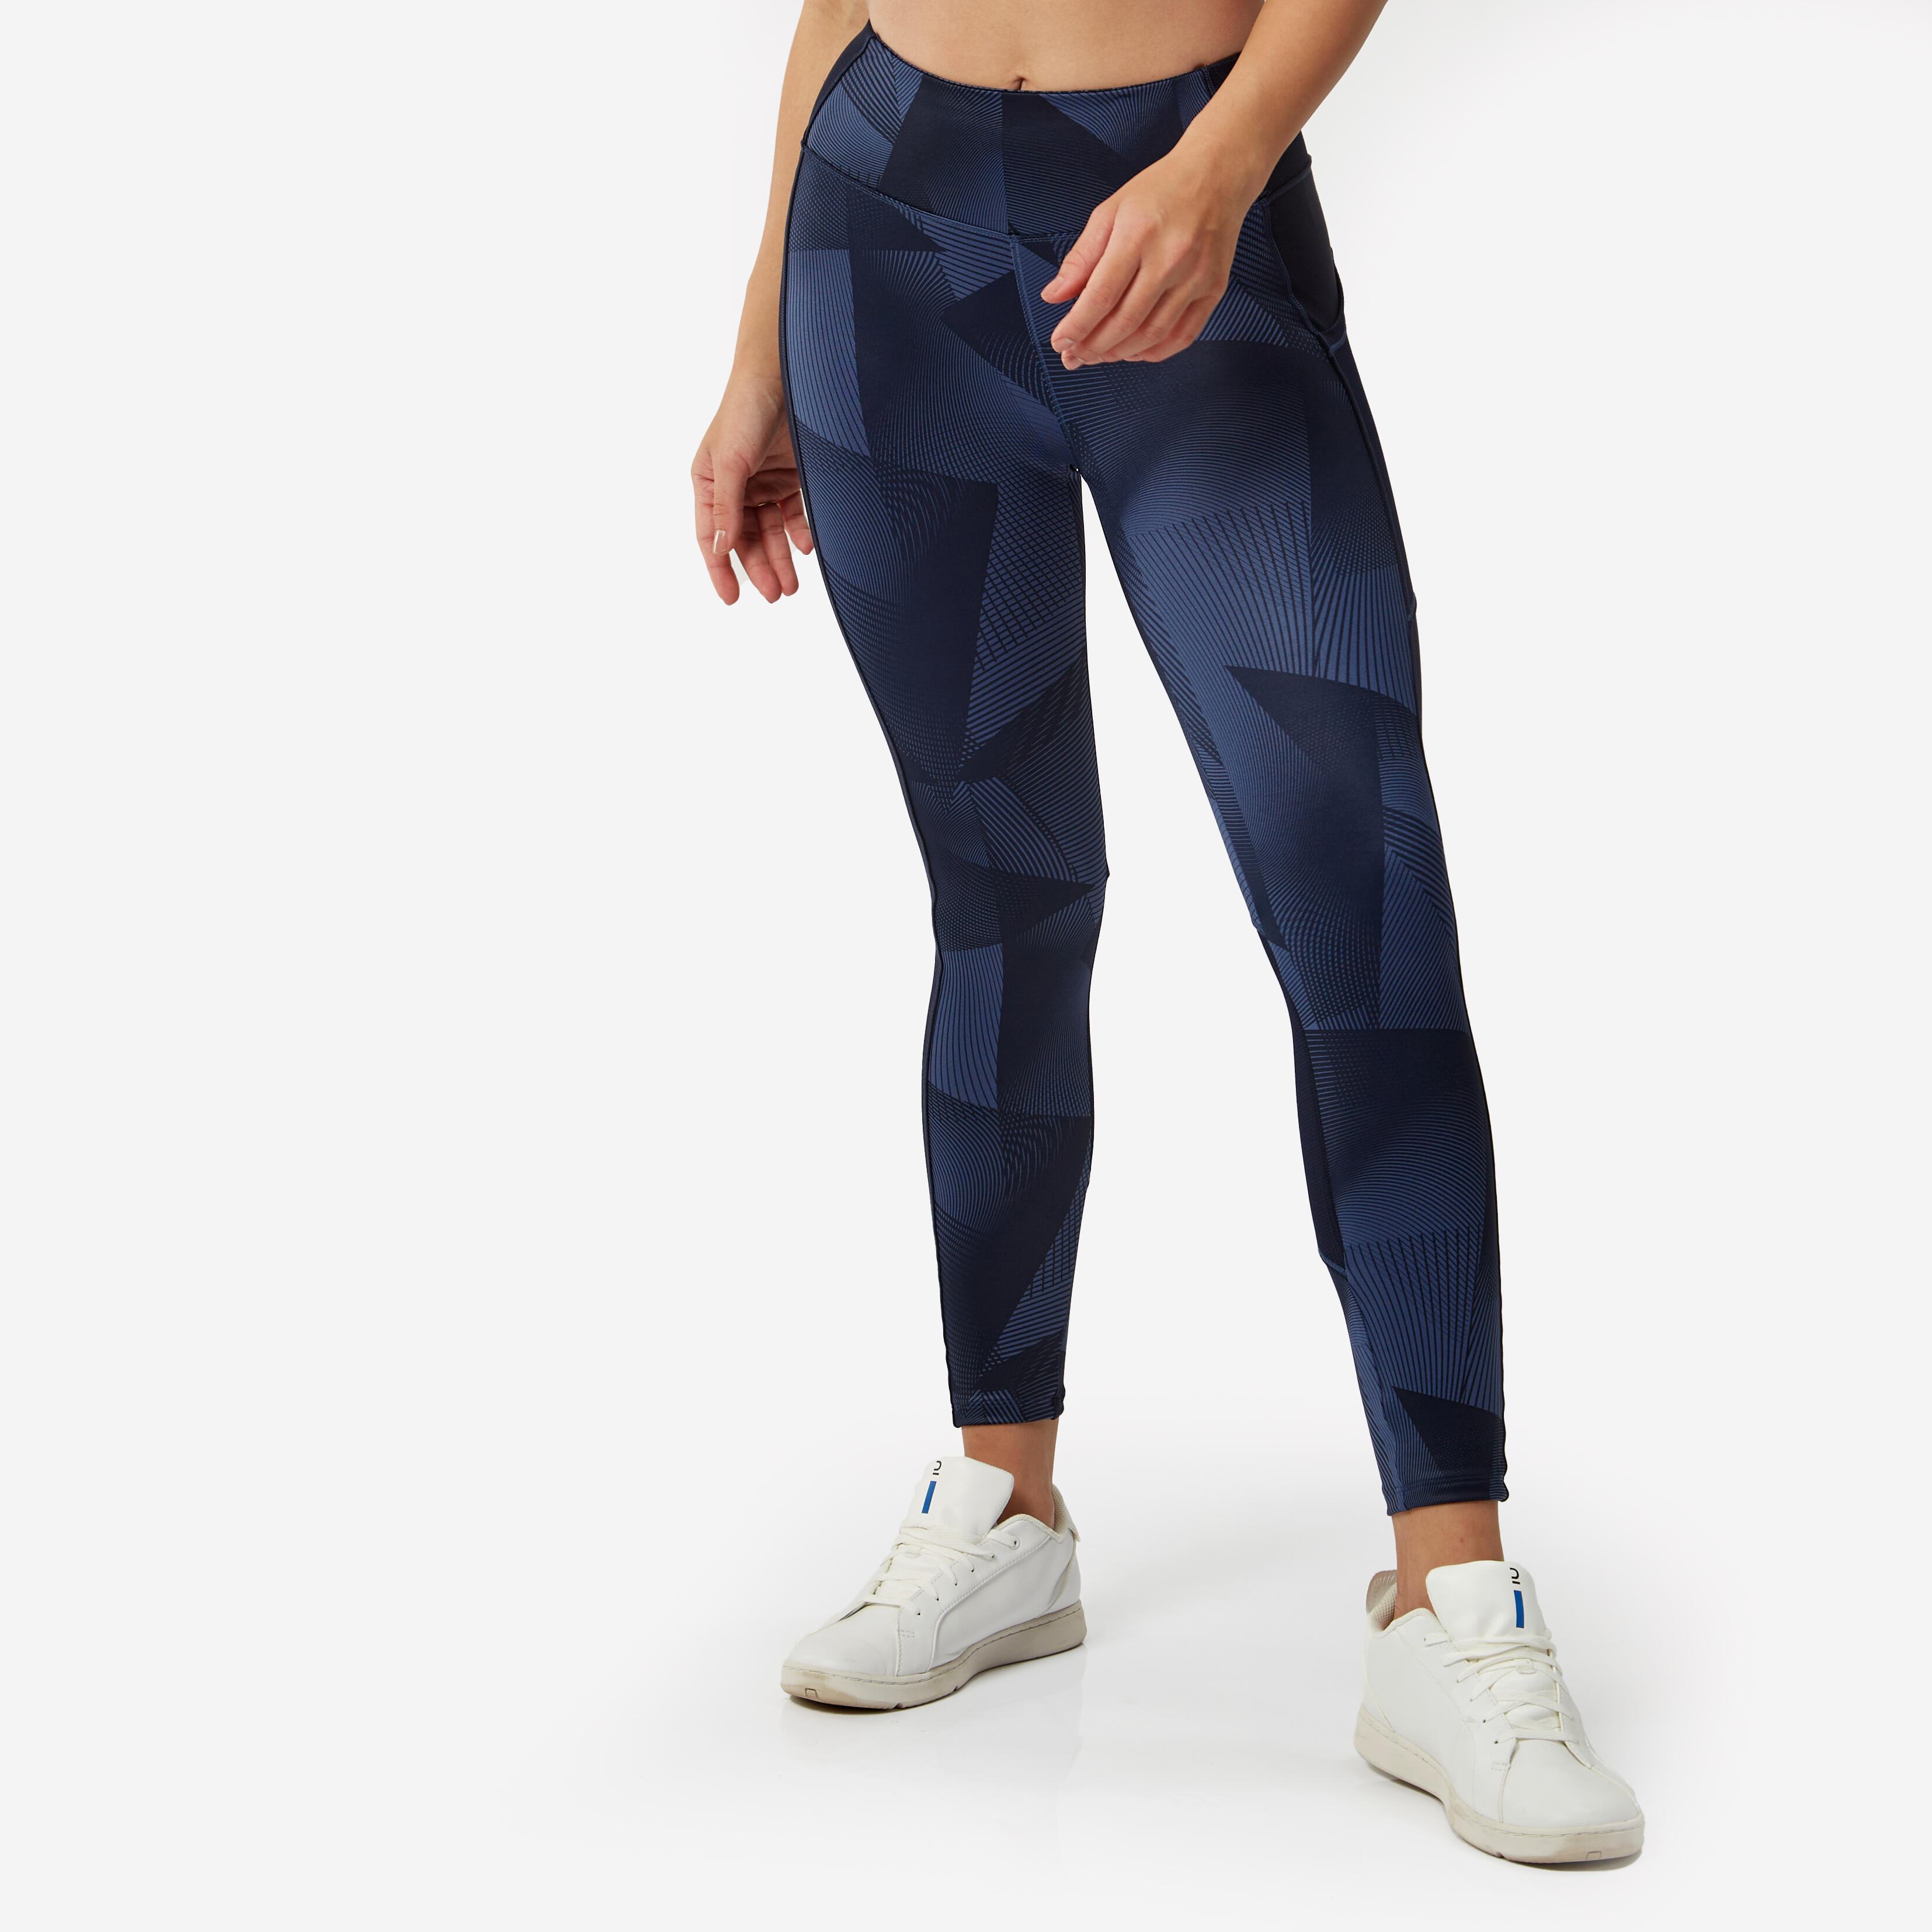 Blue Gym Leggings with Pockets | Squat Proof | Pocket Sport